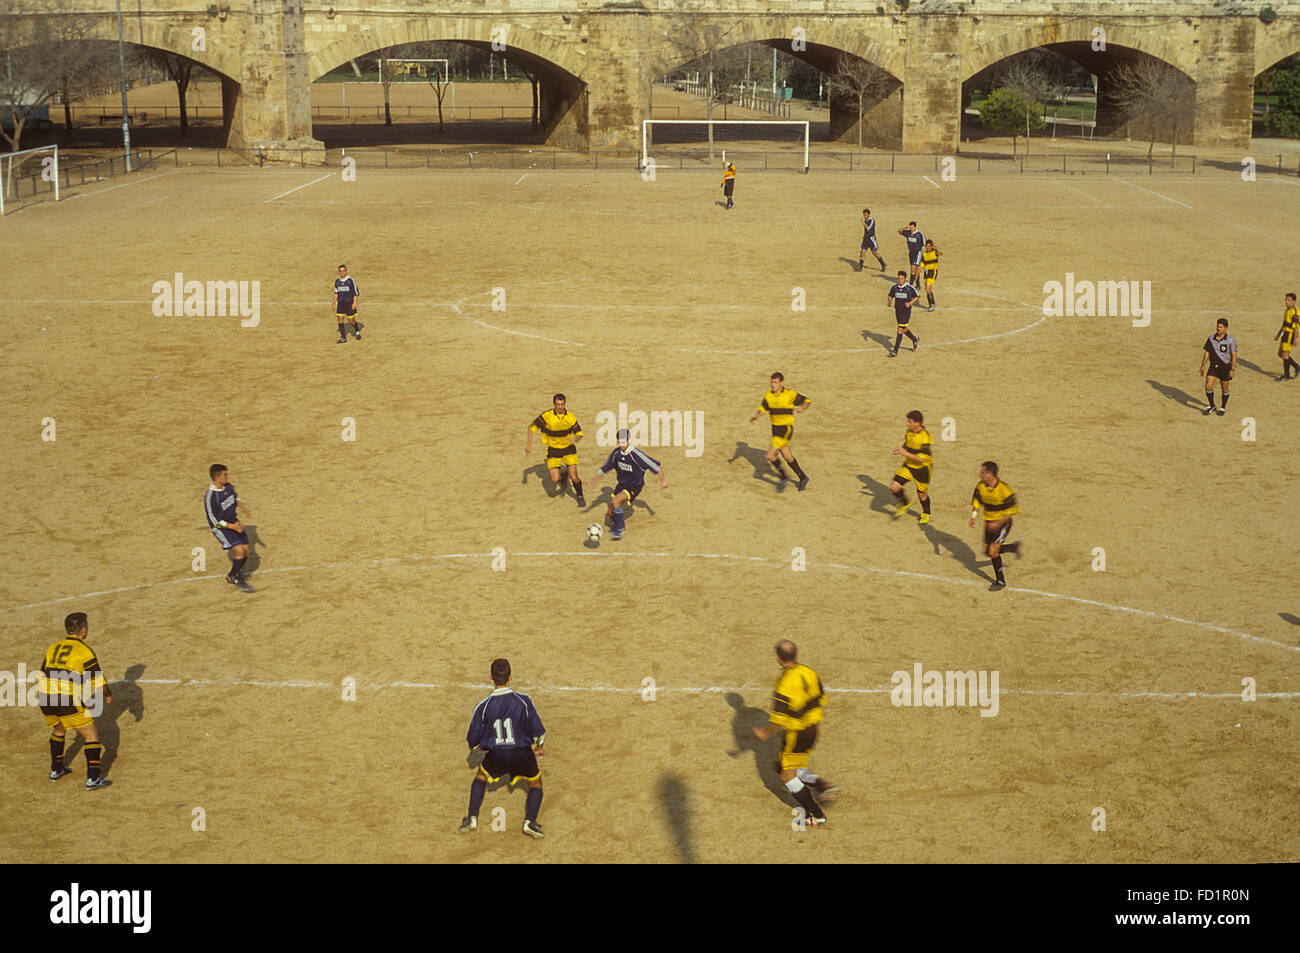 Fußballspiel in Jardi (Garten) del Turia, Valencia, Spanien Stockfoto